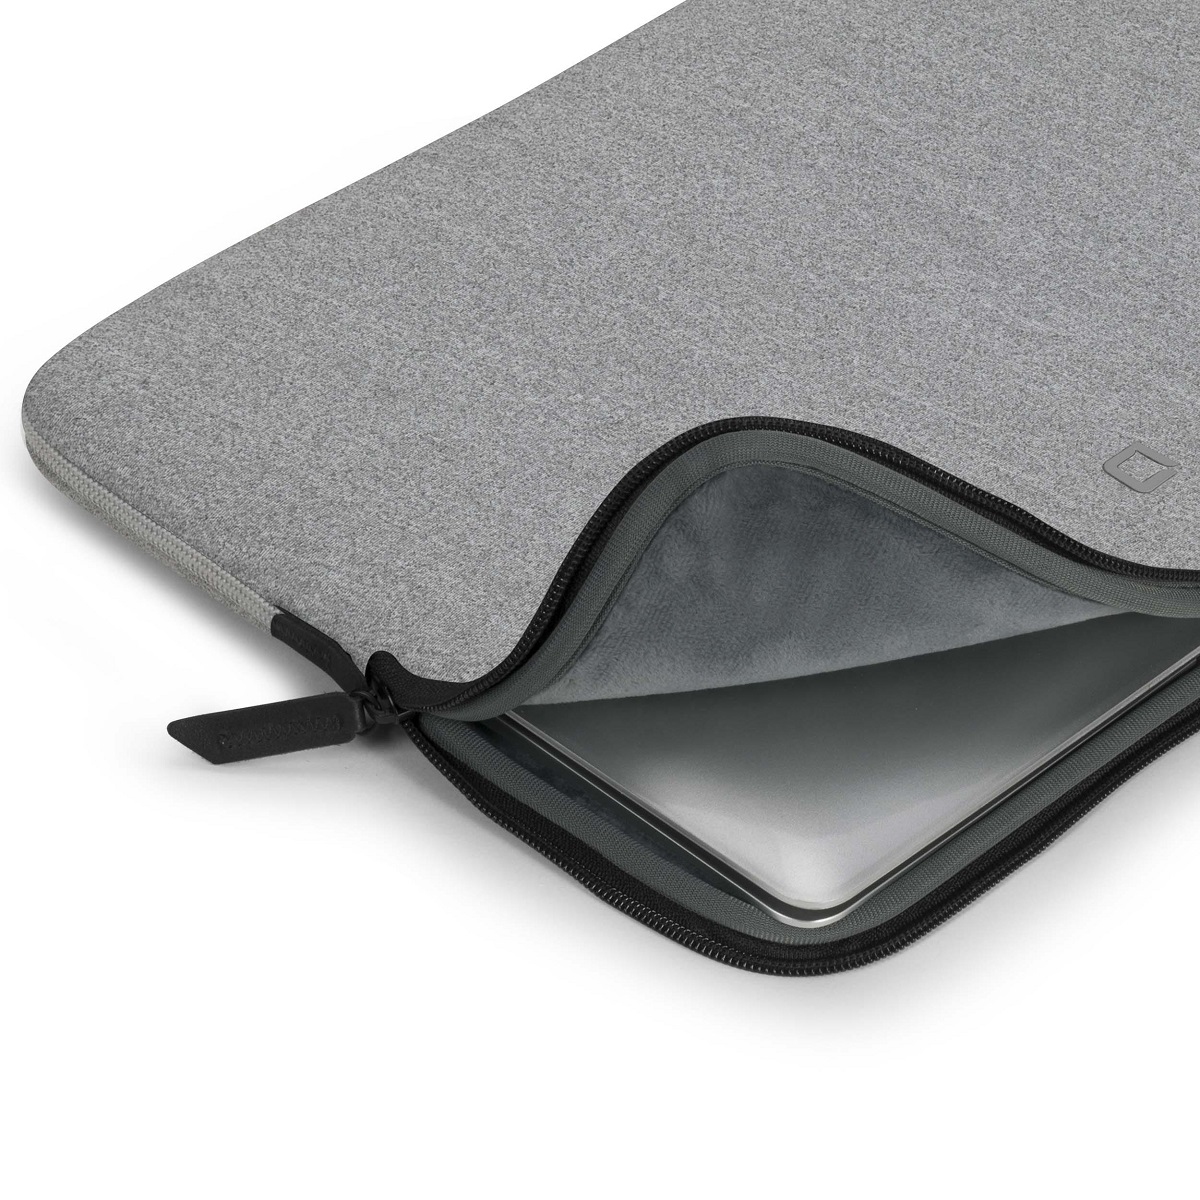 DICOTA D31751 Notebookhülle für Apple Grey Neopren, Sleeve